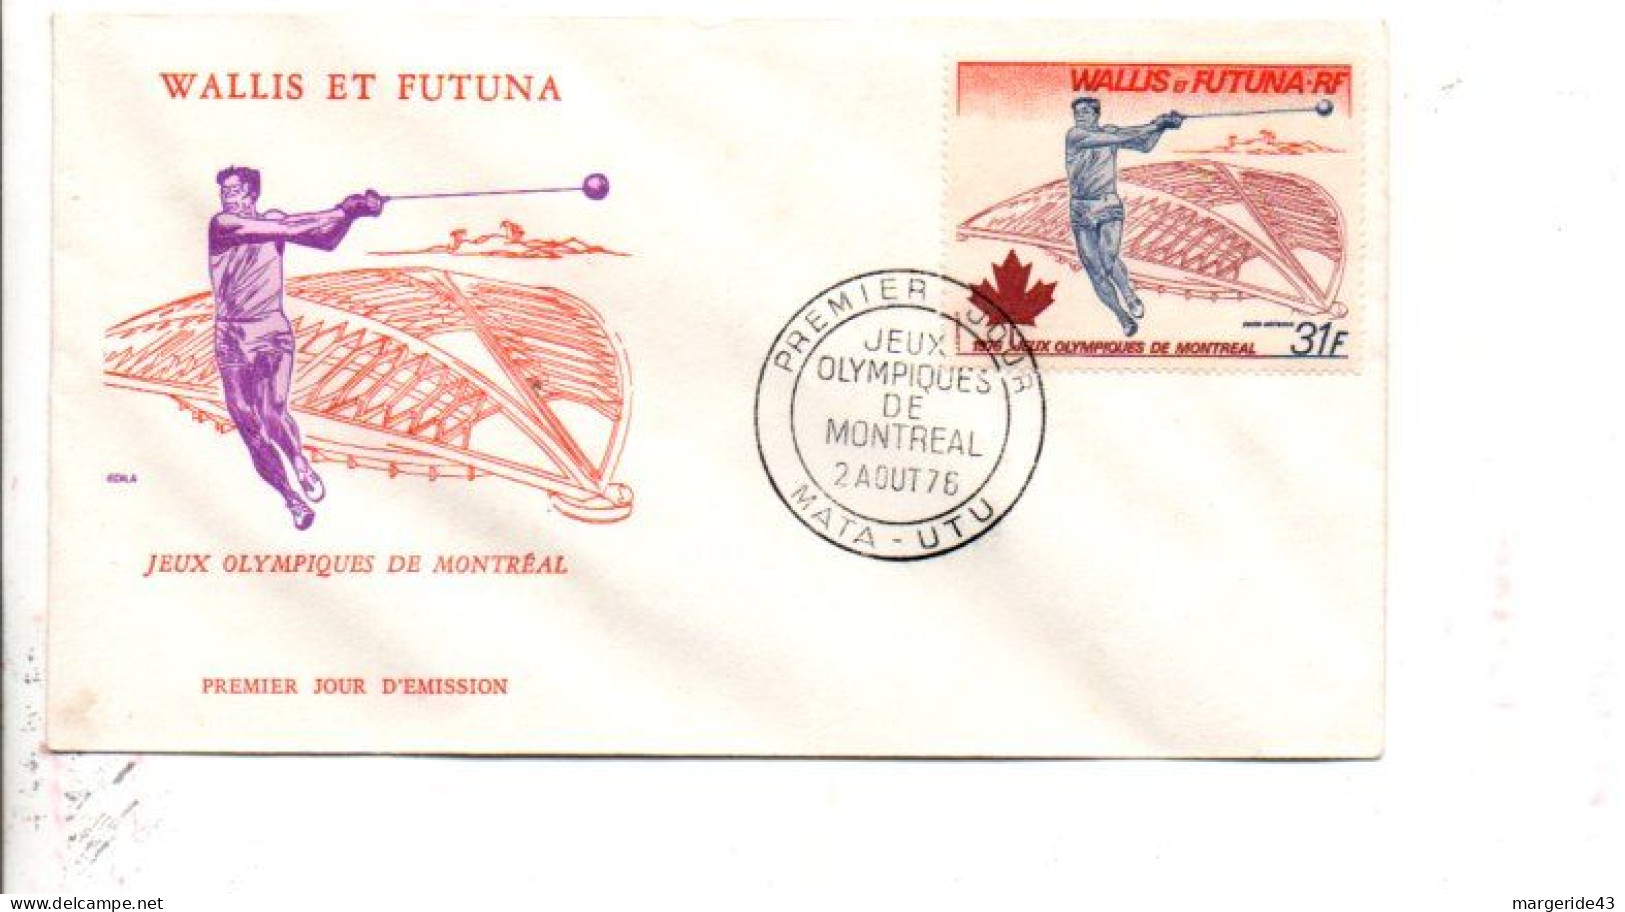 WALLIS ET FUTUNA FDC 1976 J O MONTREAL - LANCER DU POIDS - Verano 1976: Montréal